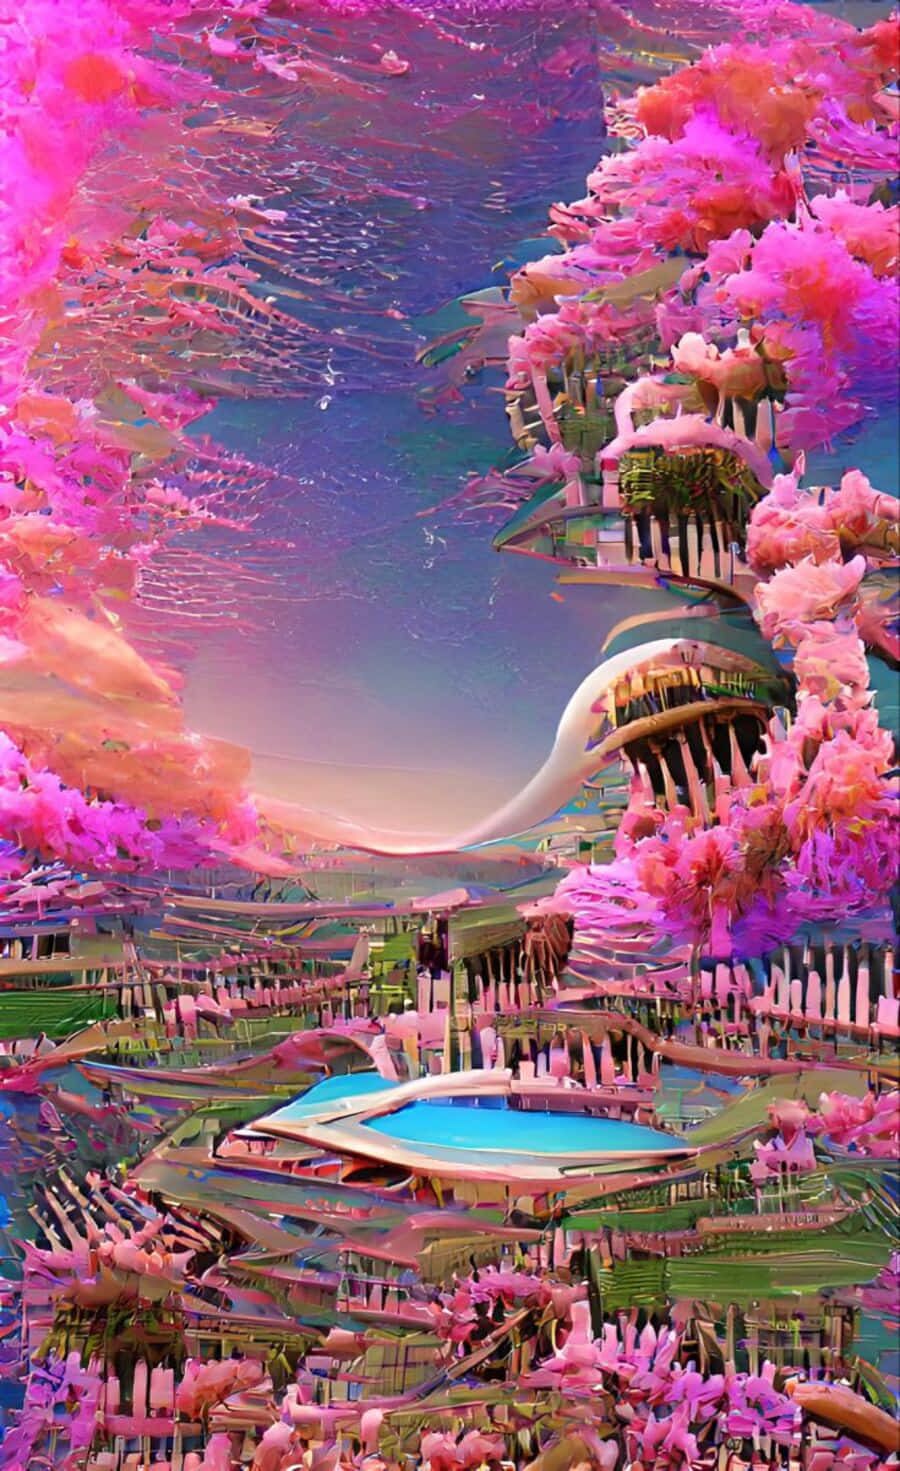 Surreal Pink Utopia Landscape Wallpaper